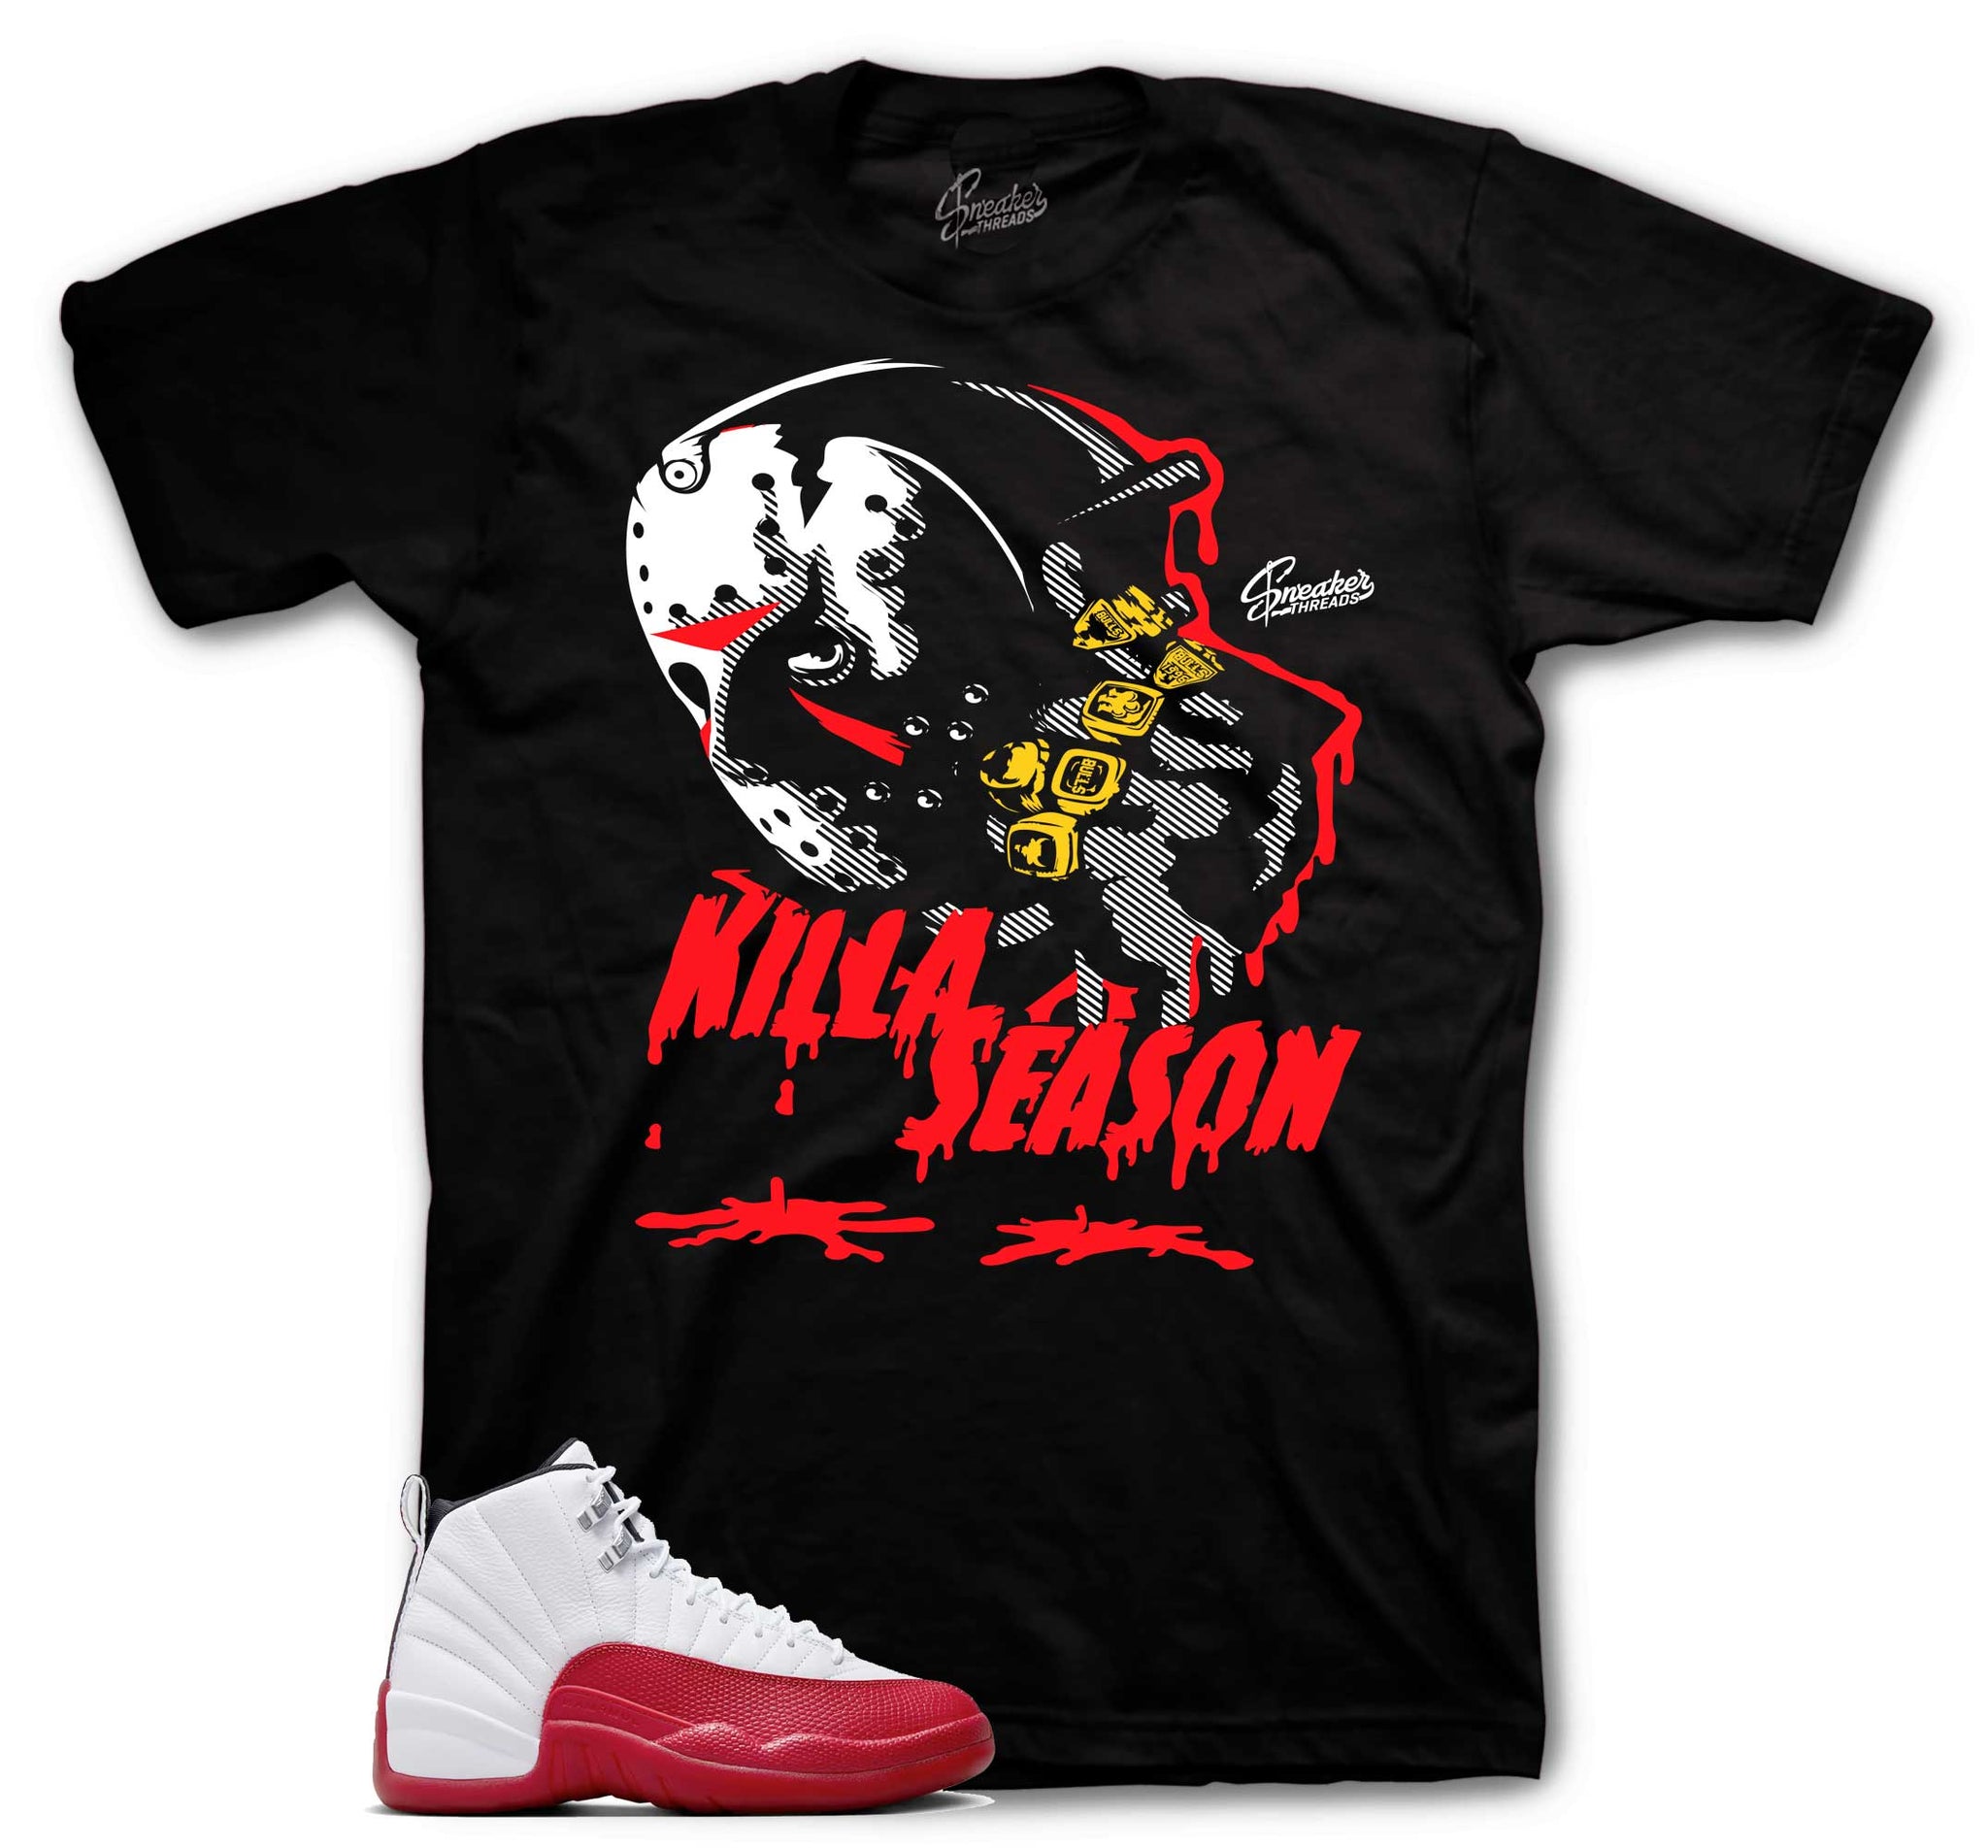 Retro 12 Cherry Shirt - Killa Season - Black